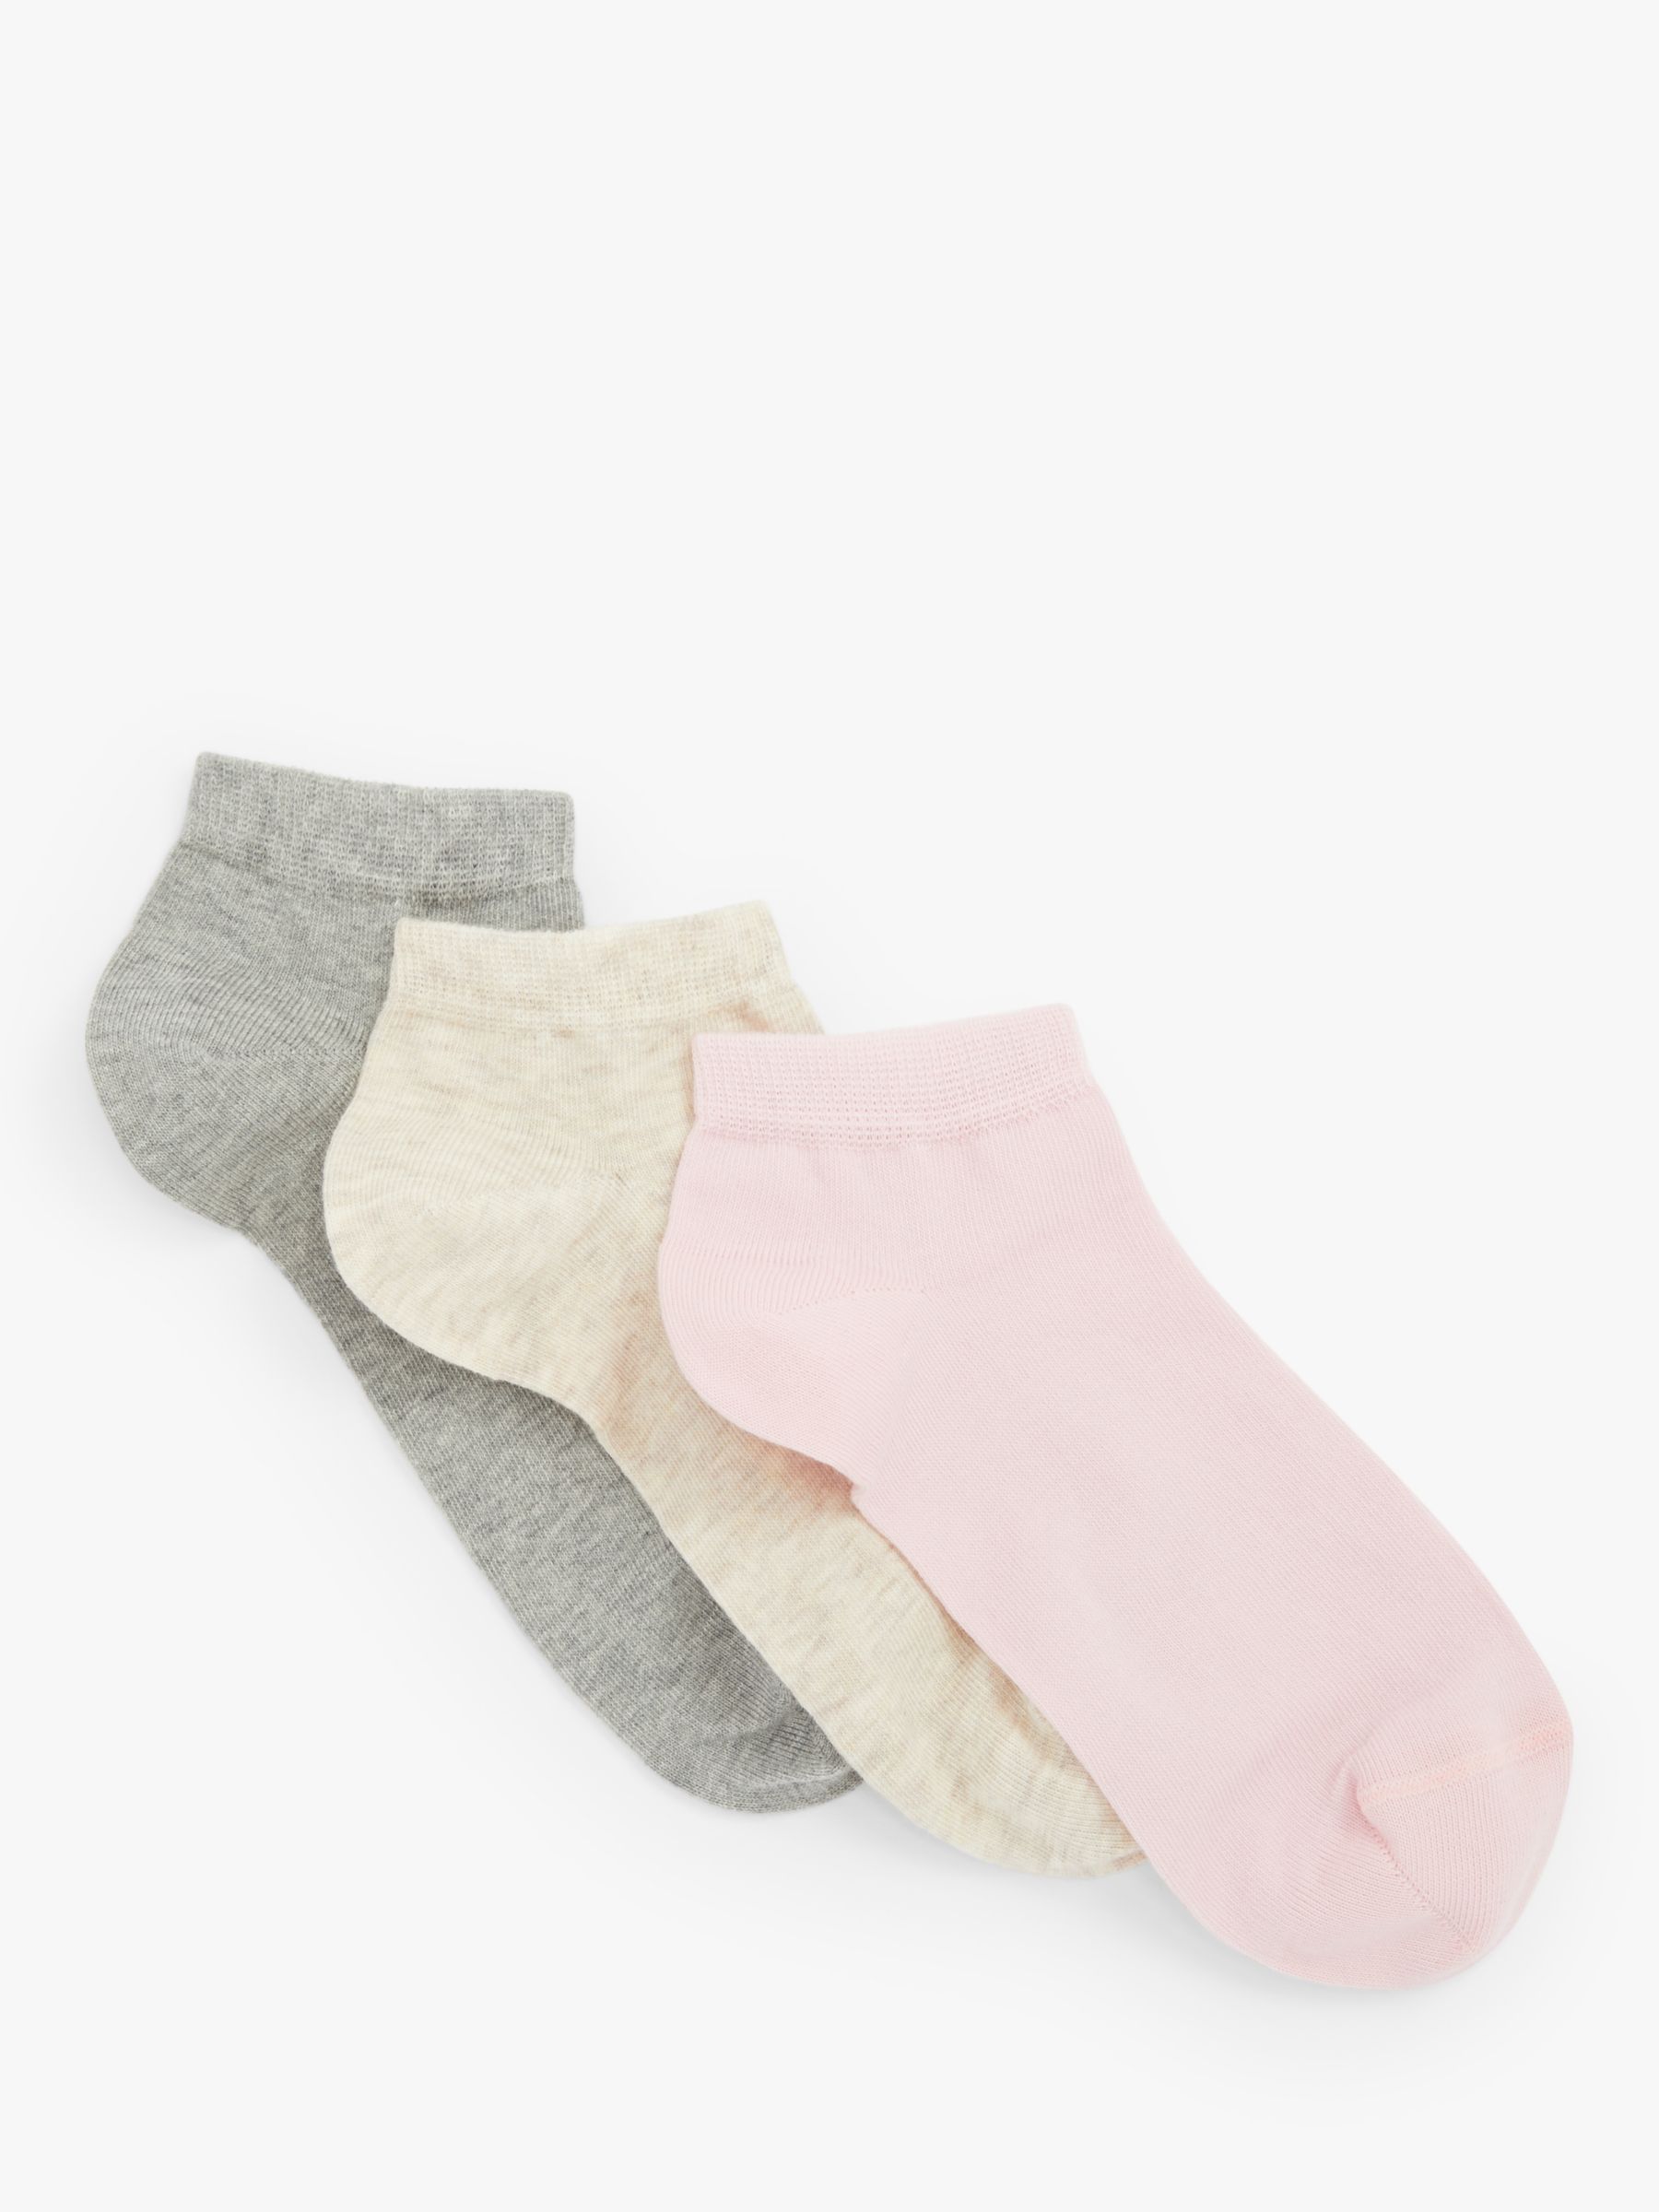 John Lewis & Partners Women's Organic Cotton Rich Trainer Socks, Pack ...